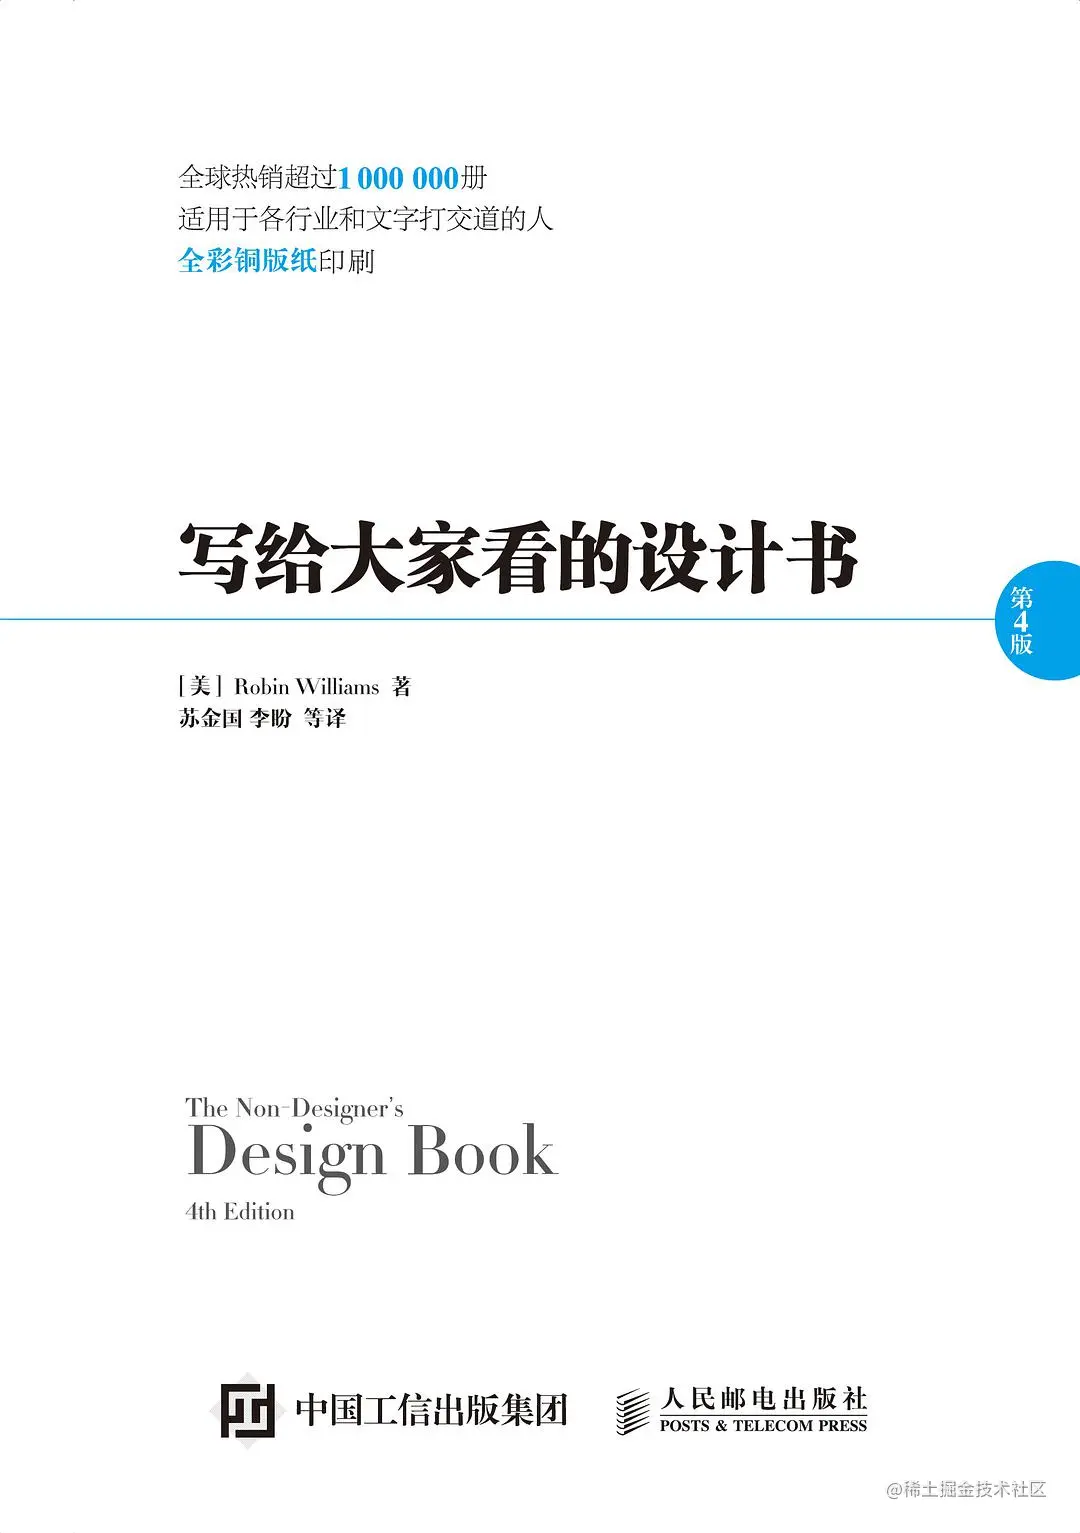 design-book.jpeg